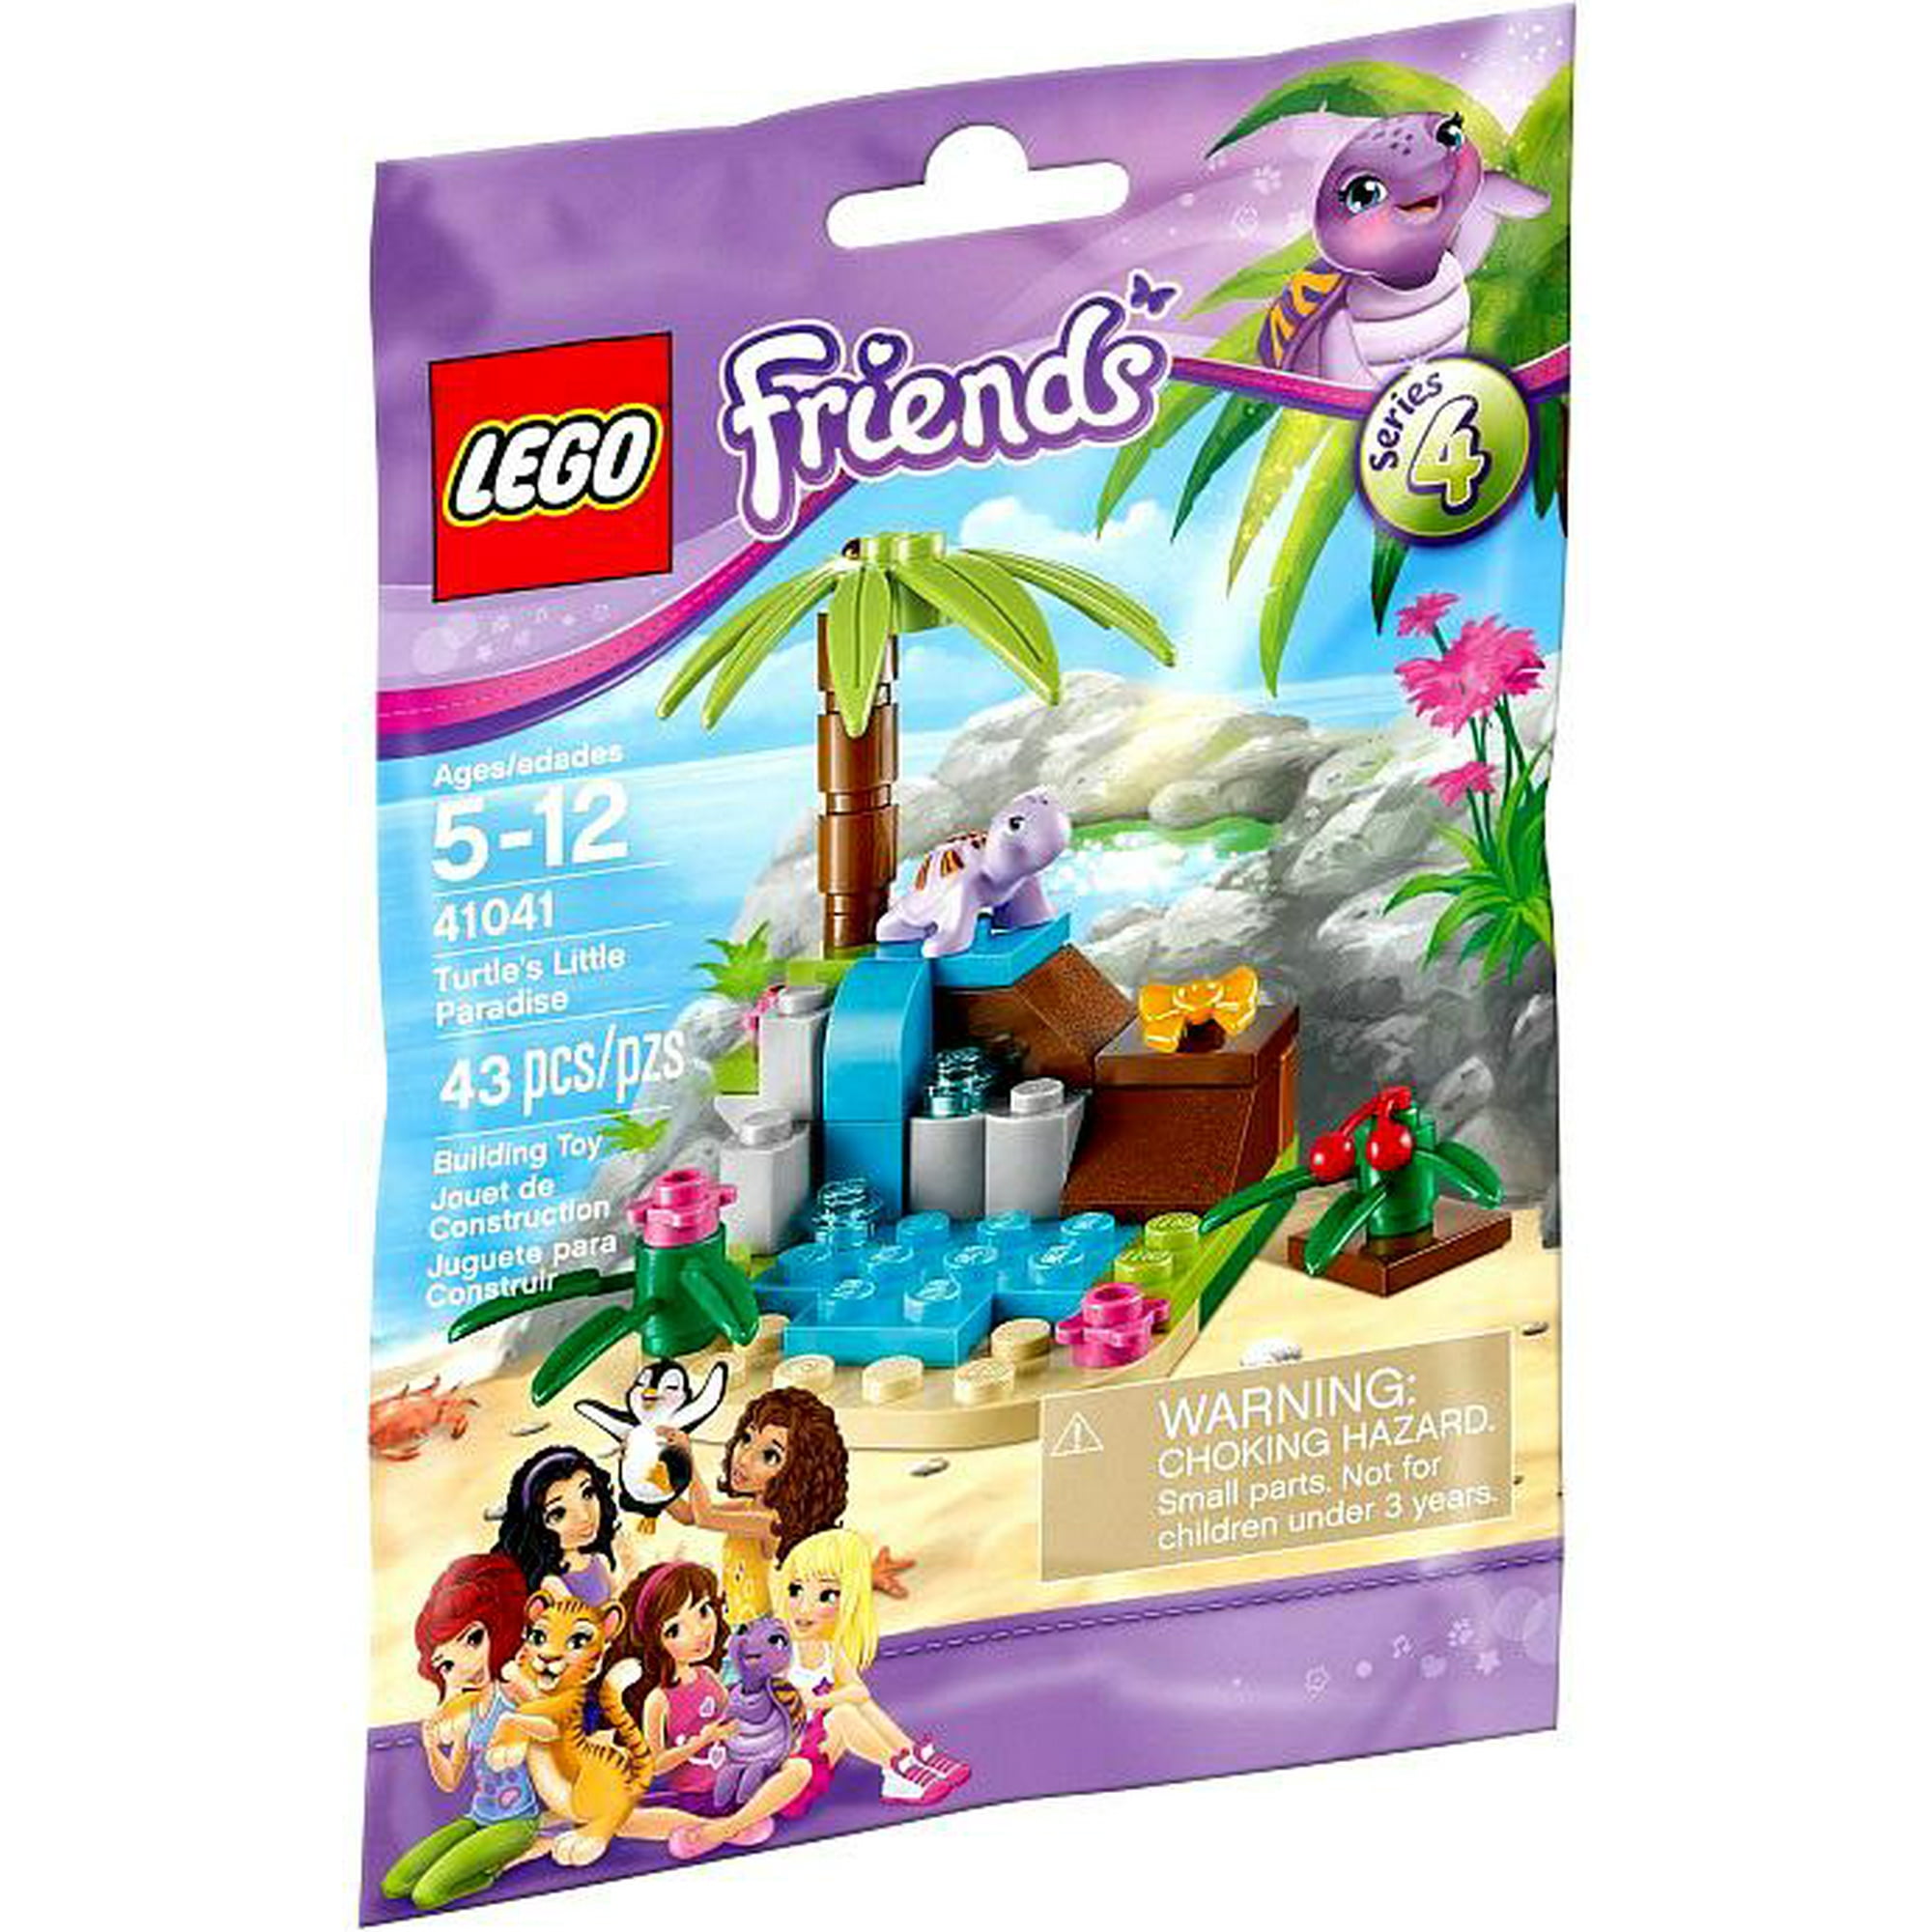 LEGO Friends Turtles Little Paradise Mini Set - Walmart.com